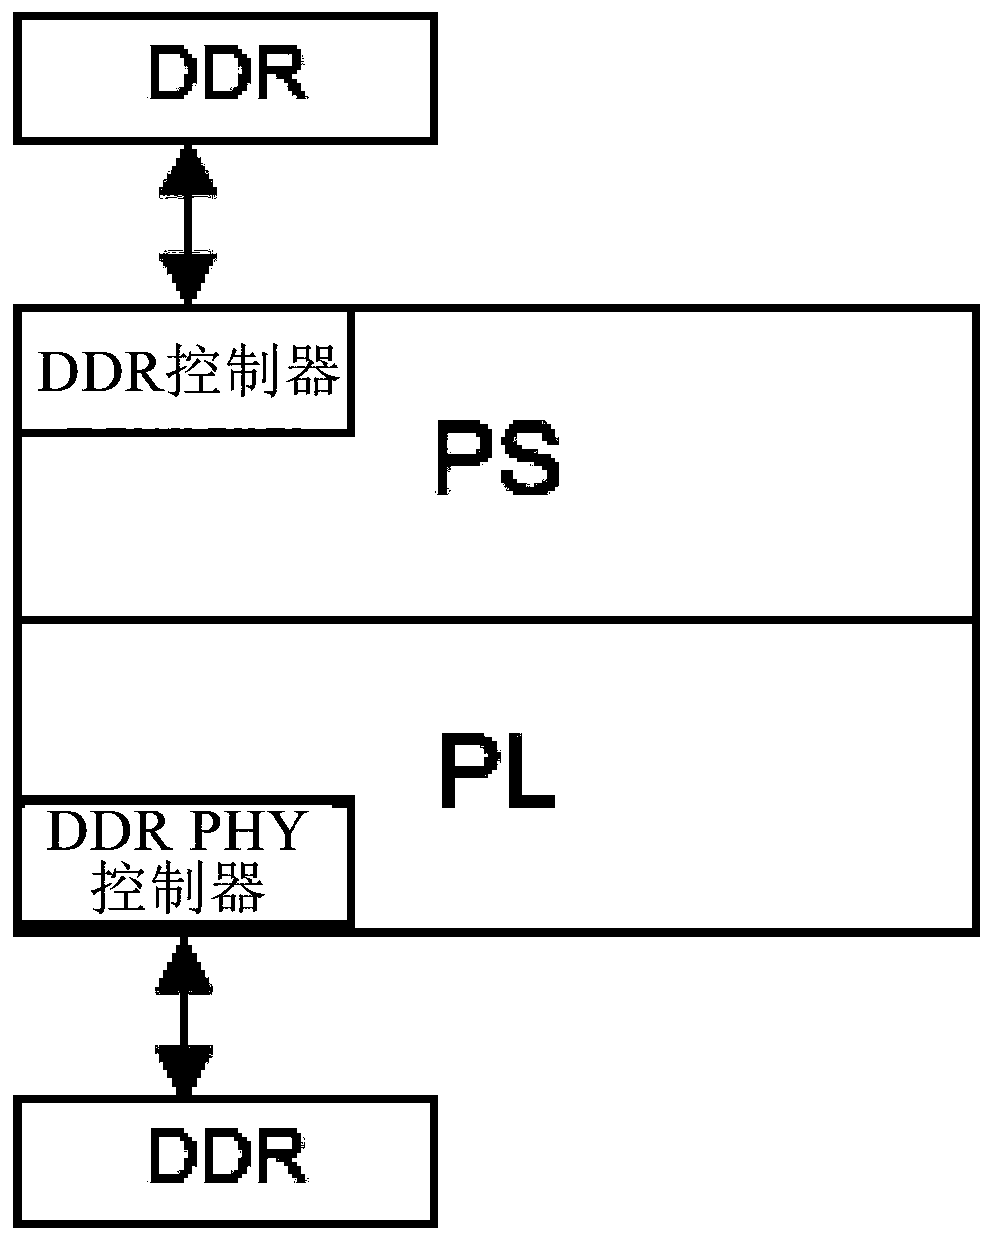 ZYNQ FPGA chip, data processing method thereof and storage medium